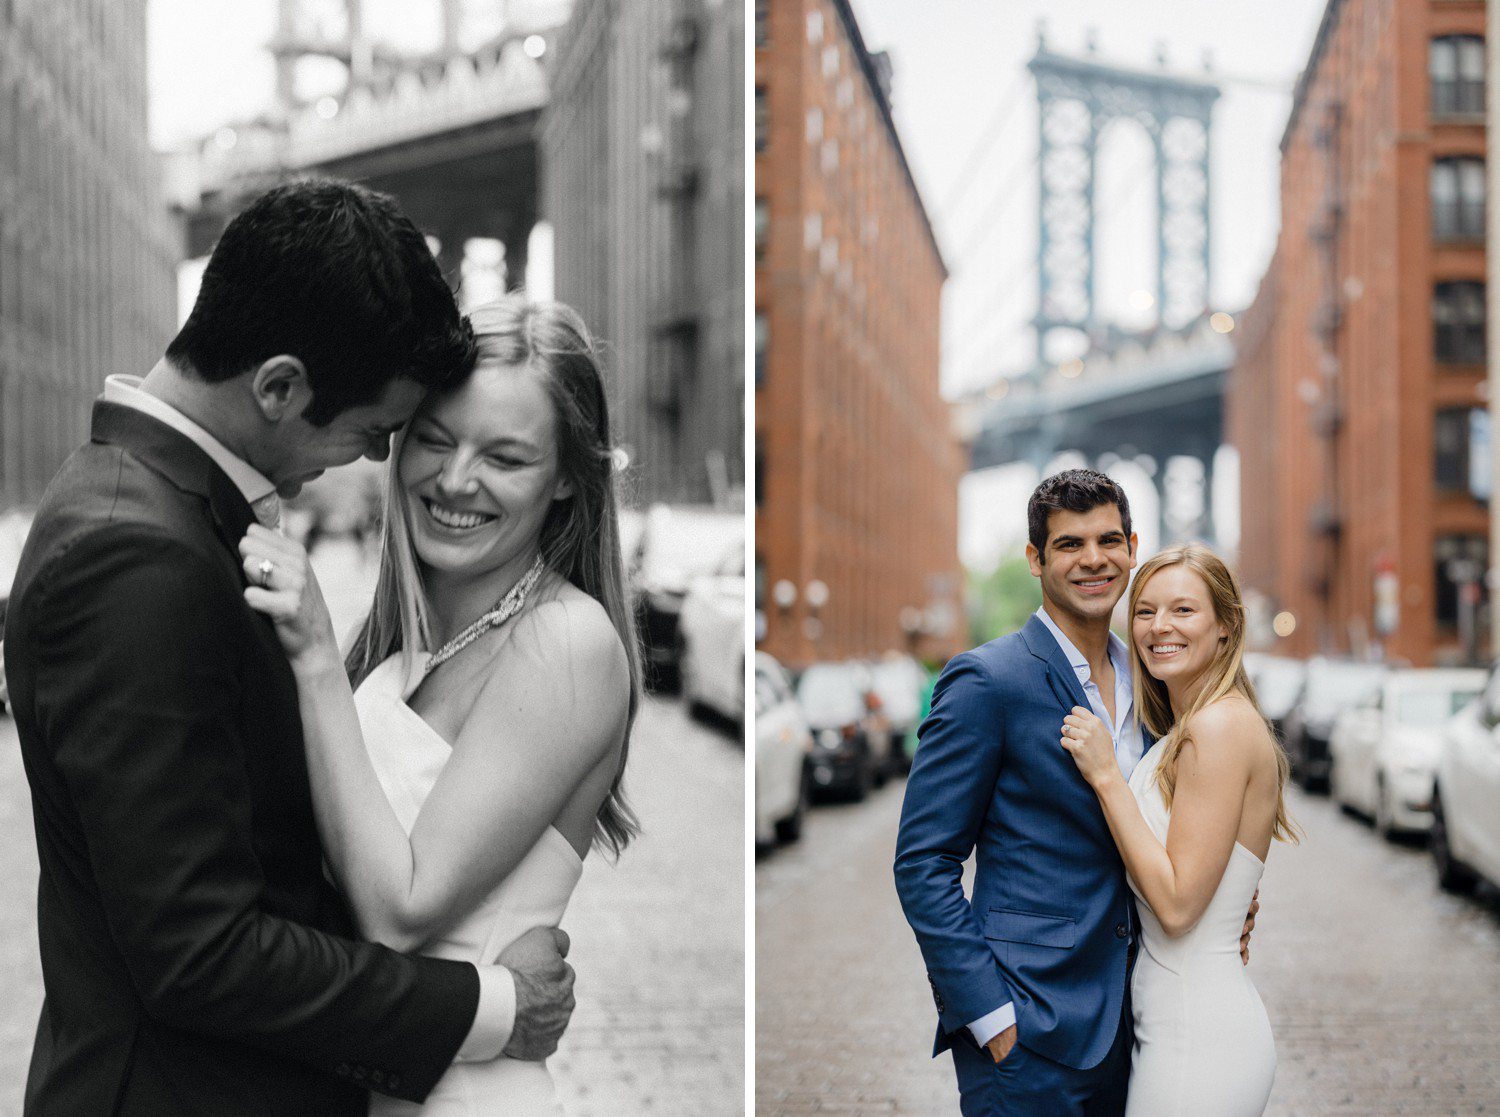 New York City engagement photos at Brooklyn Bridge.